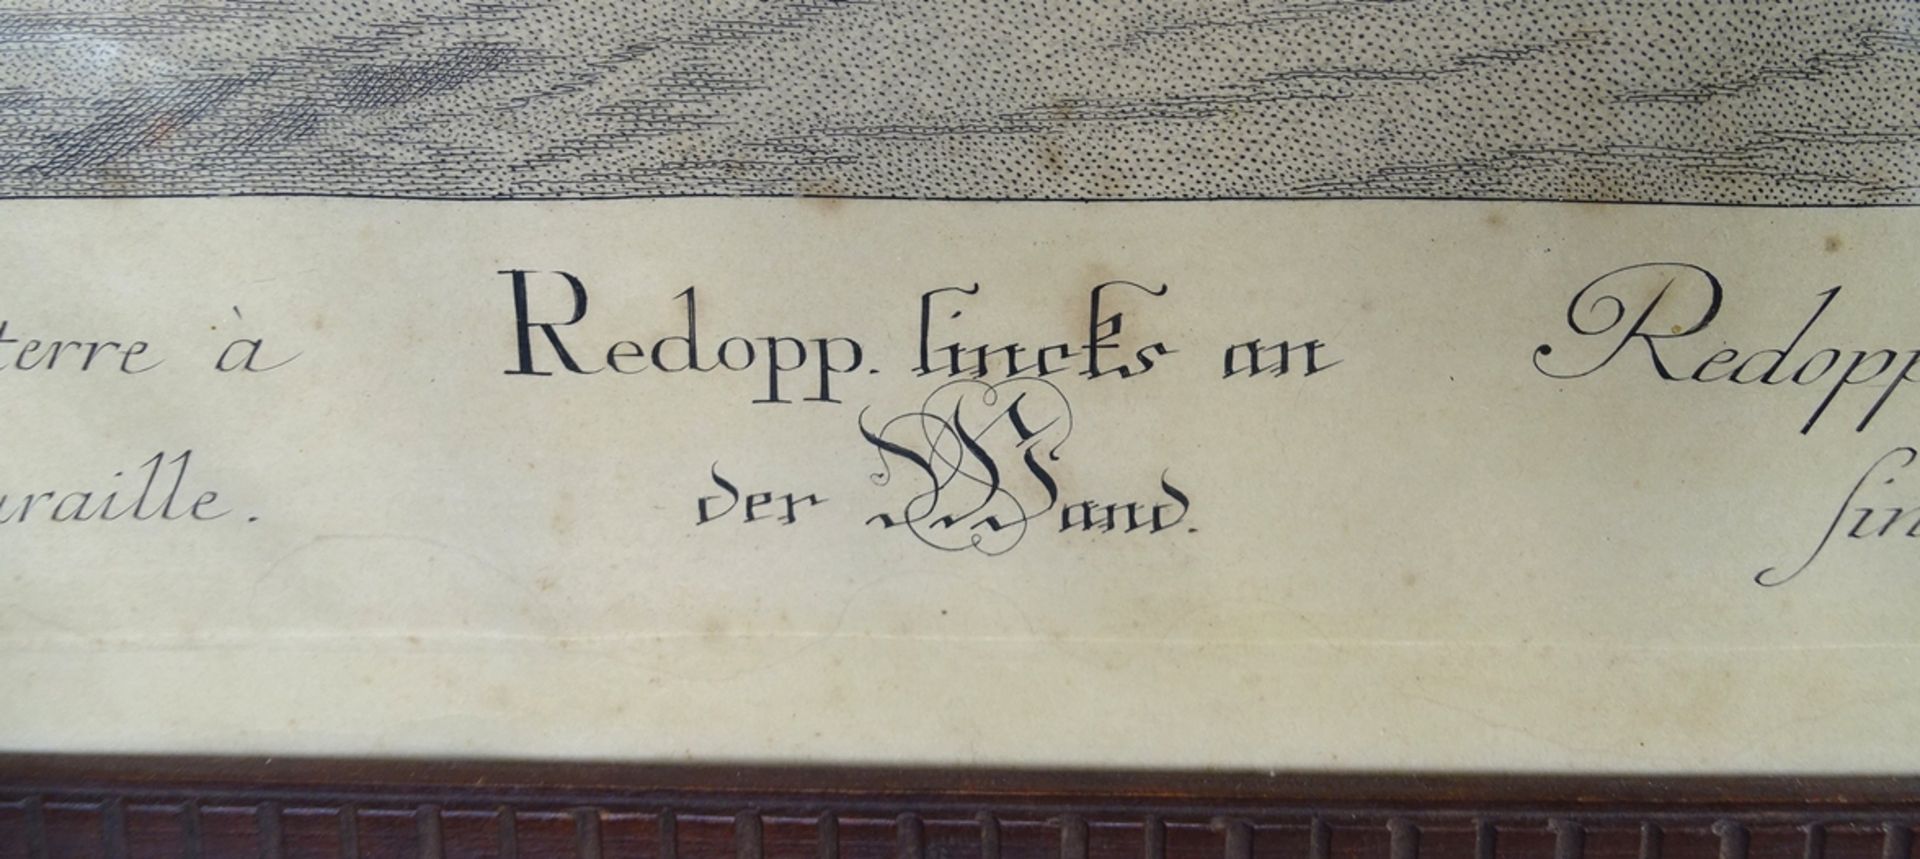 Kupferstich nach Johann Elias Ridinger, Redopp.links an der Wand, Stockfleckig, ger/Glas, RG 49x64, - Bild 4 aus 8